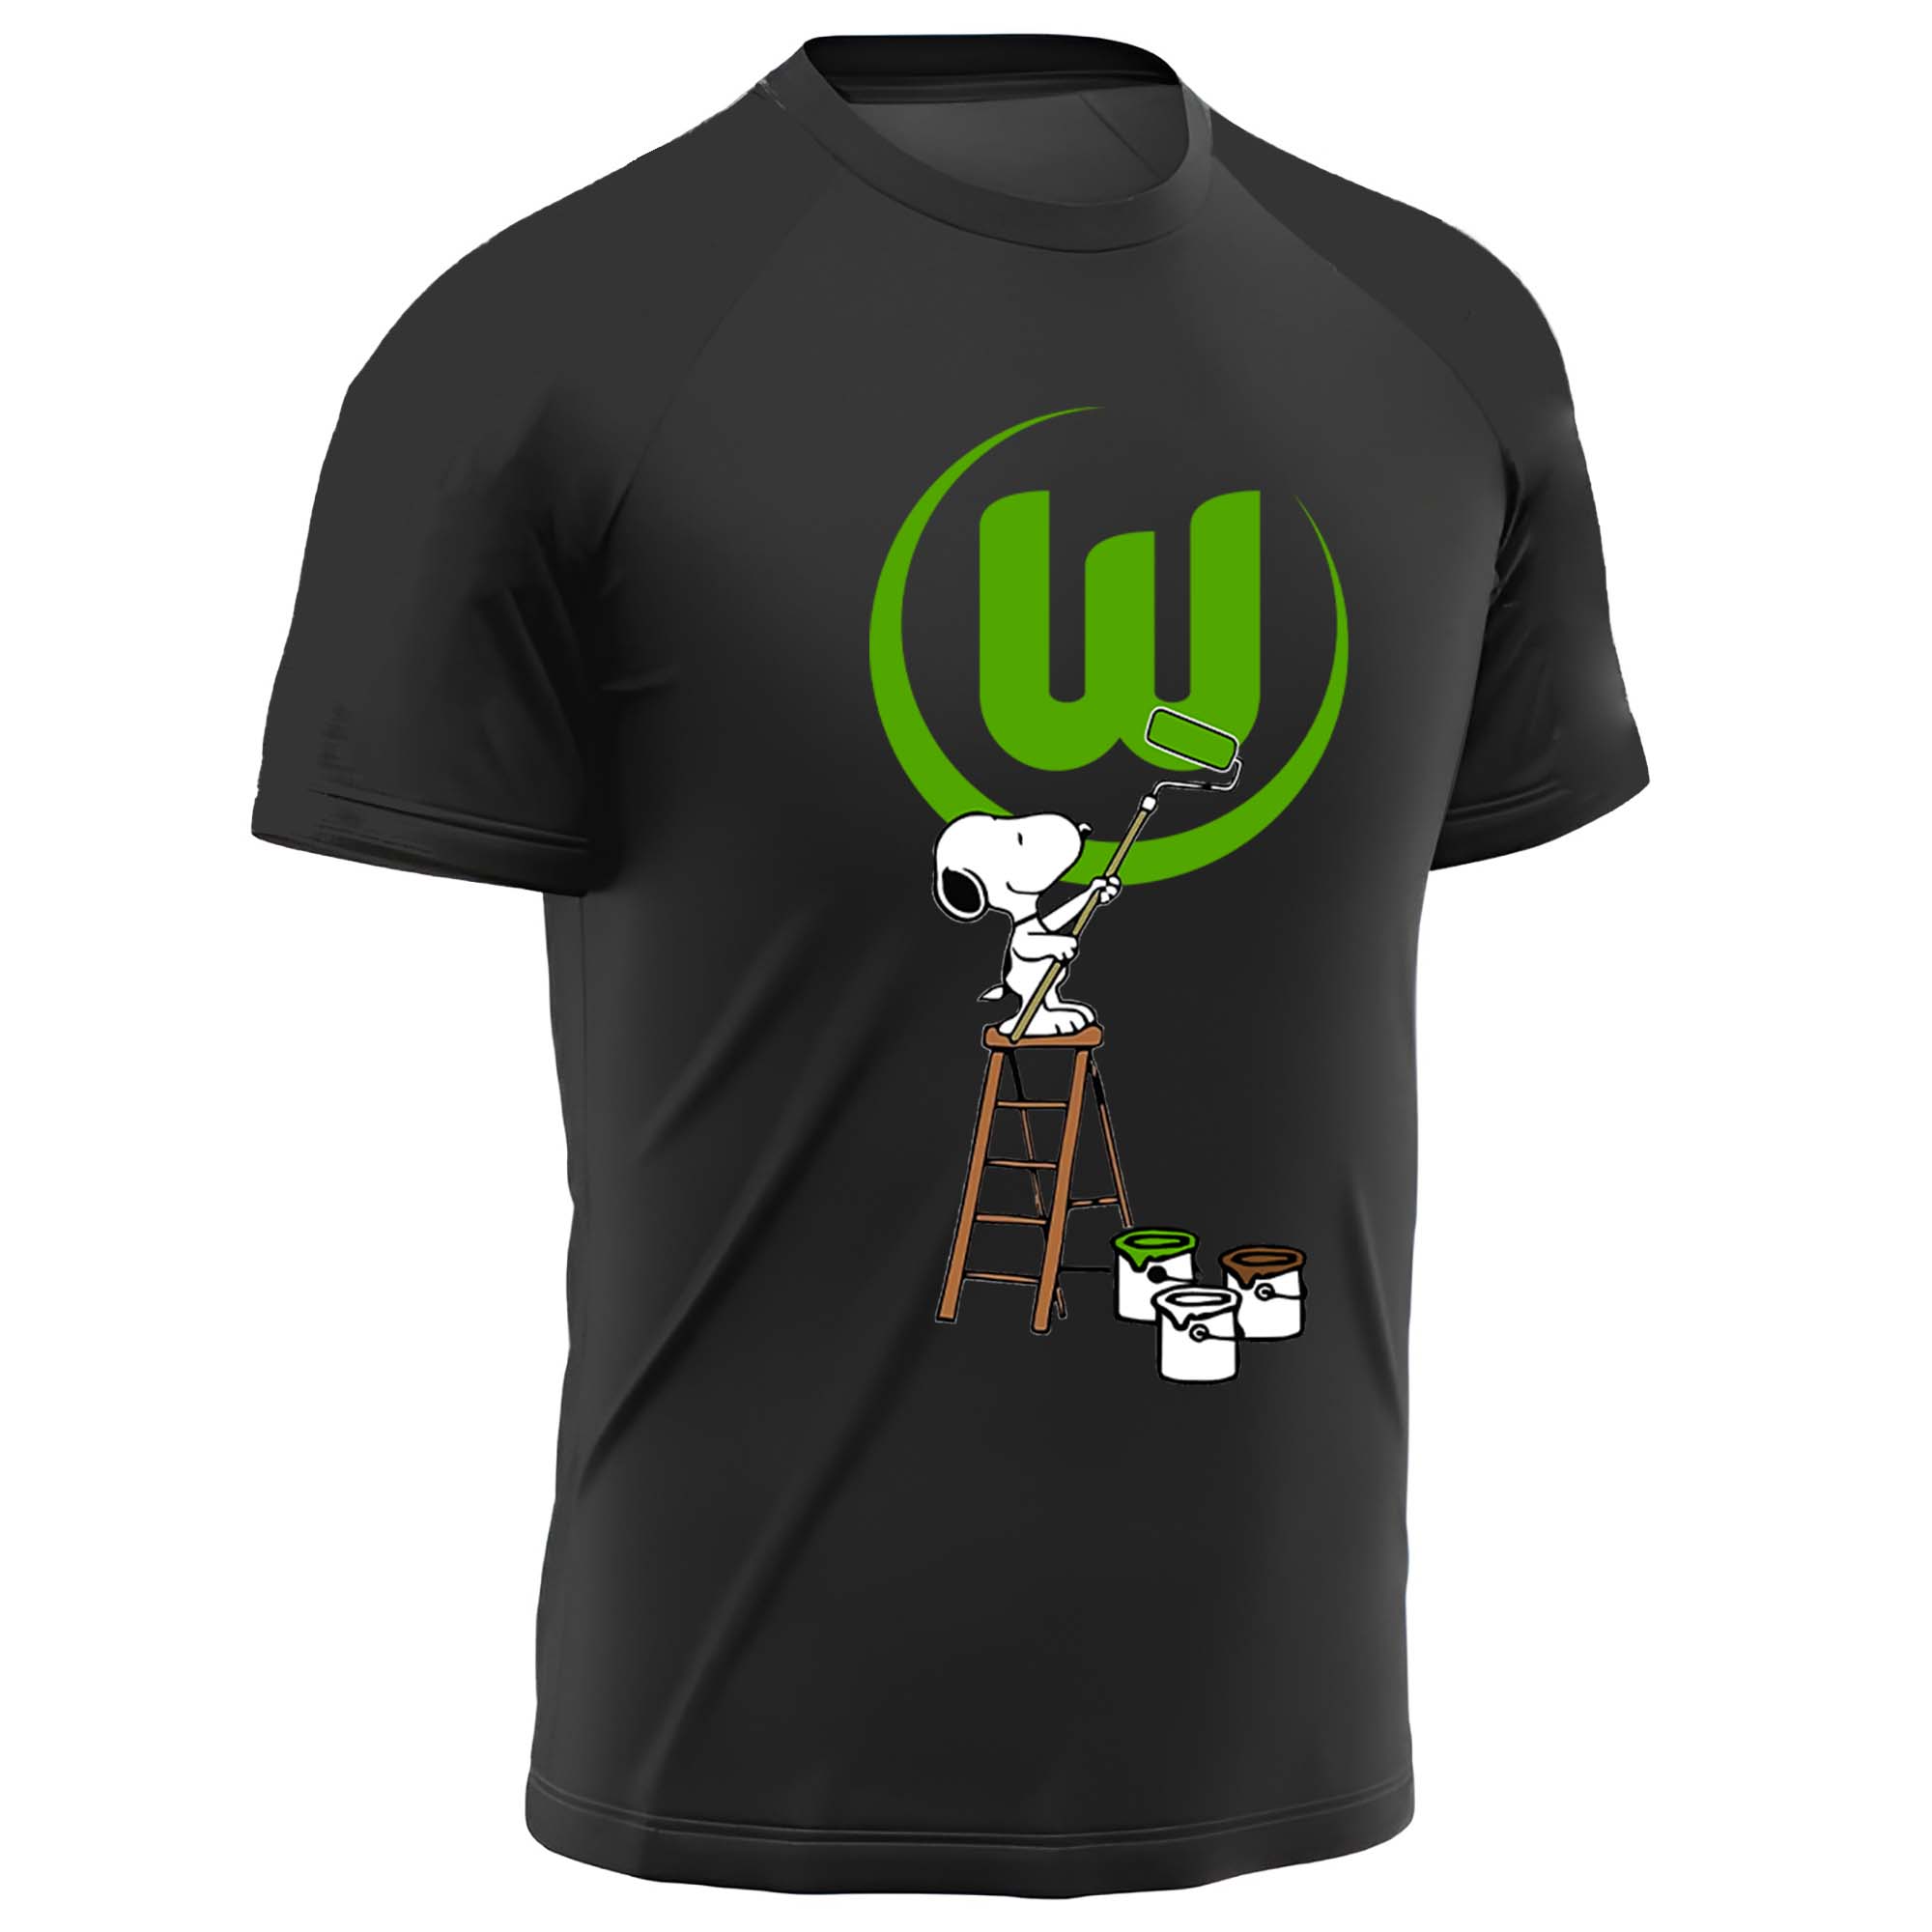 VfL Wolfsburg Mix Snoopy Shirt PT54891